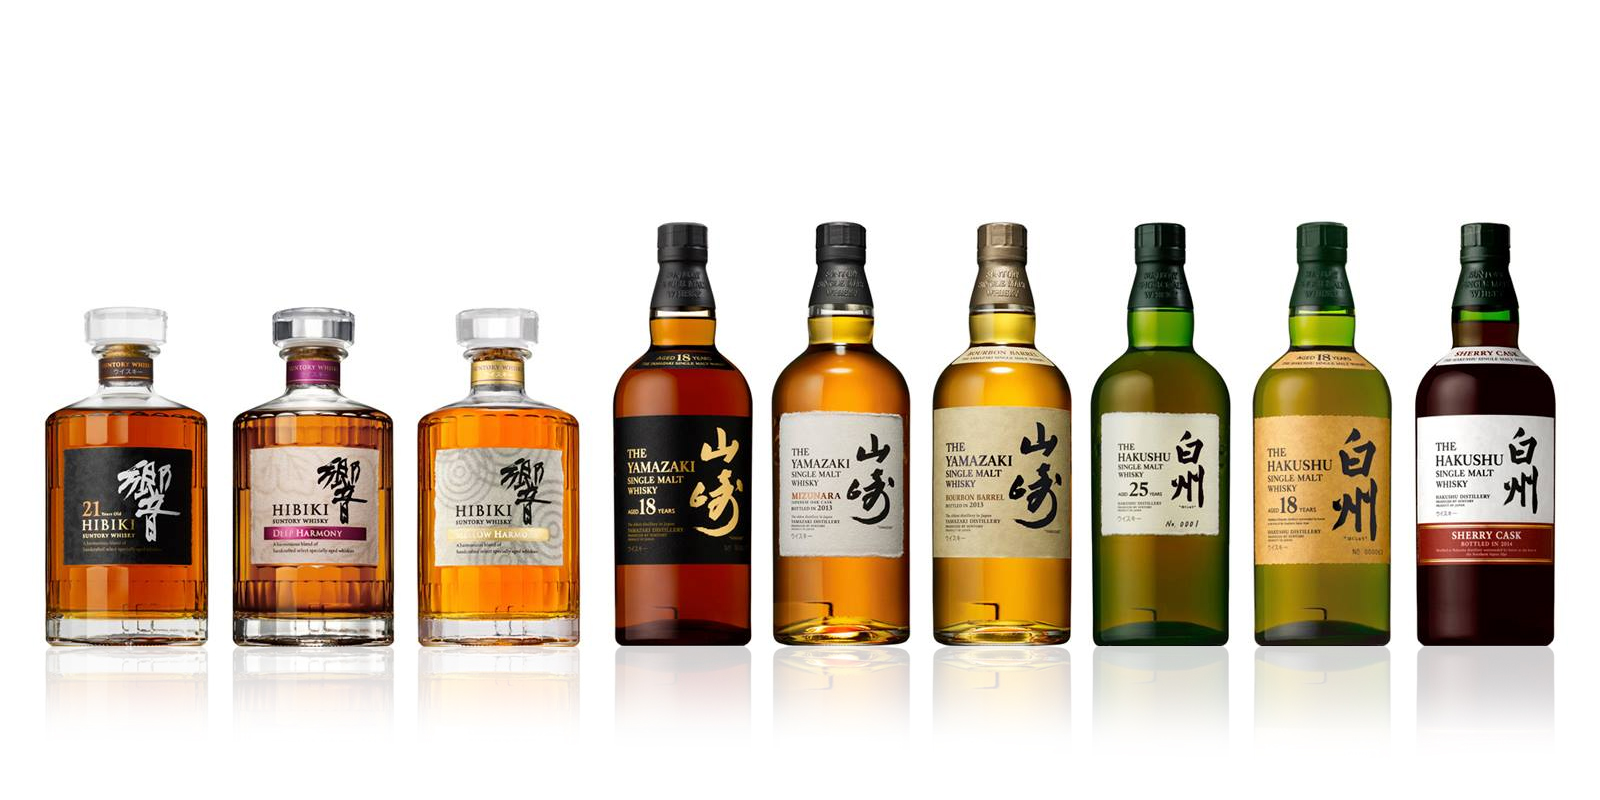 International Spirits Challenge (ISC) 2014 ; Suntory whiskies rewarded